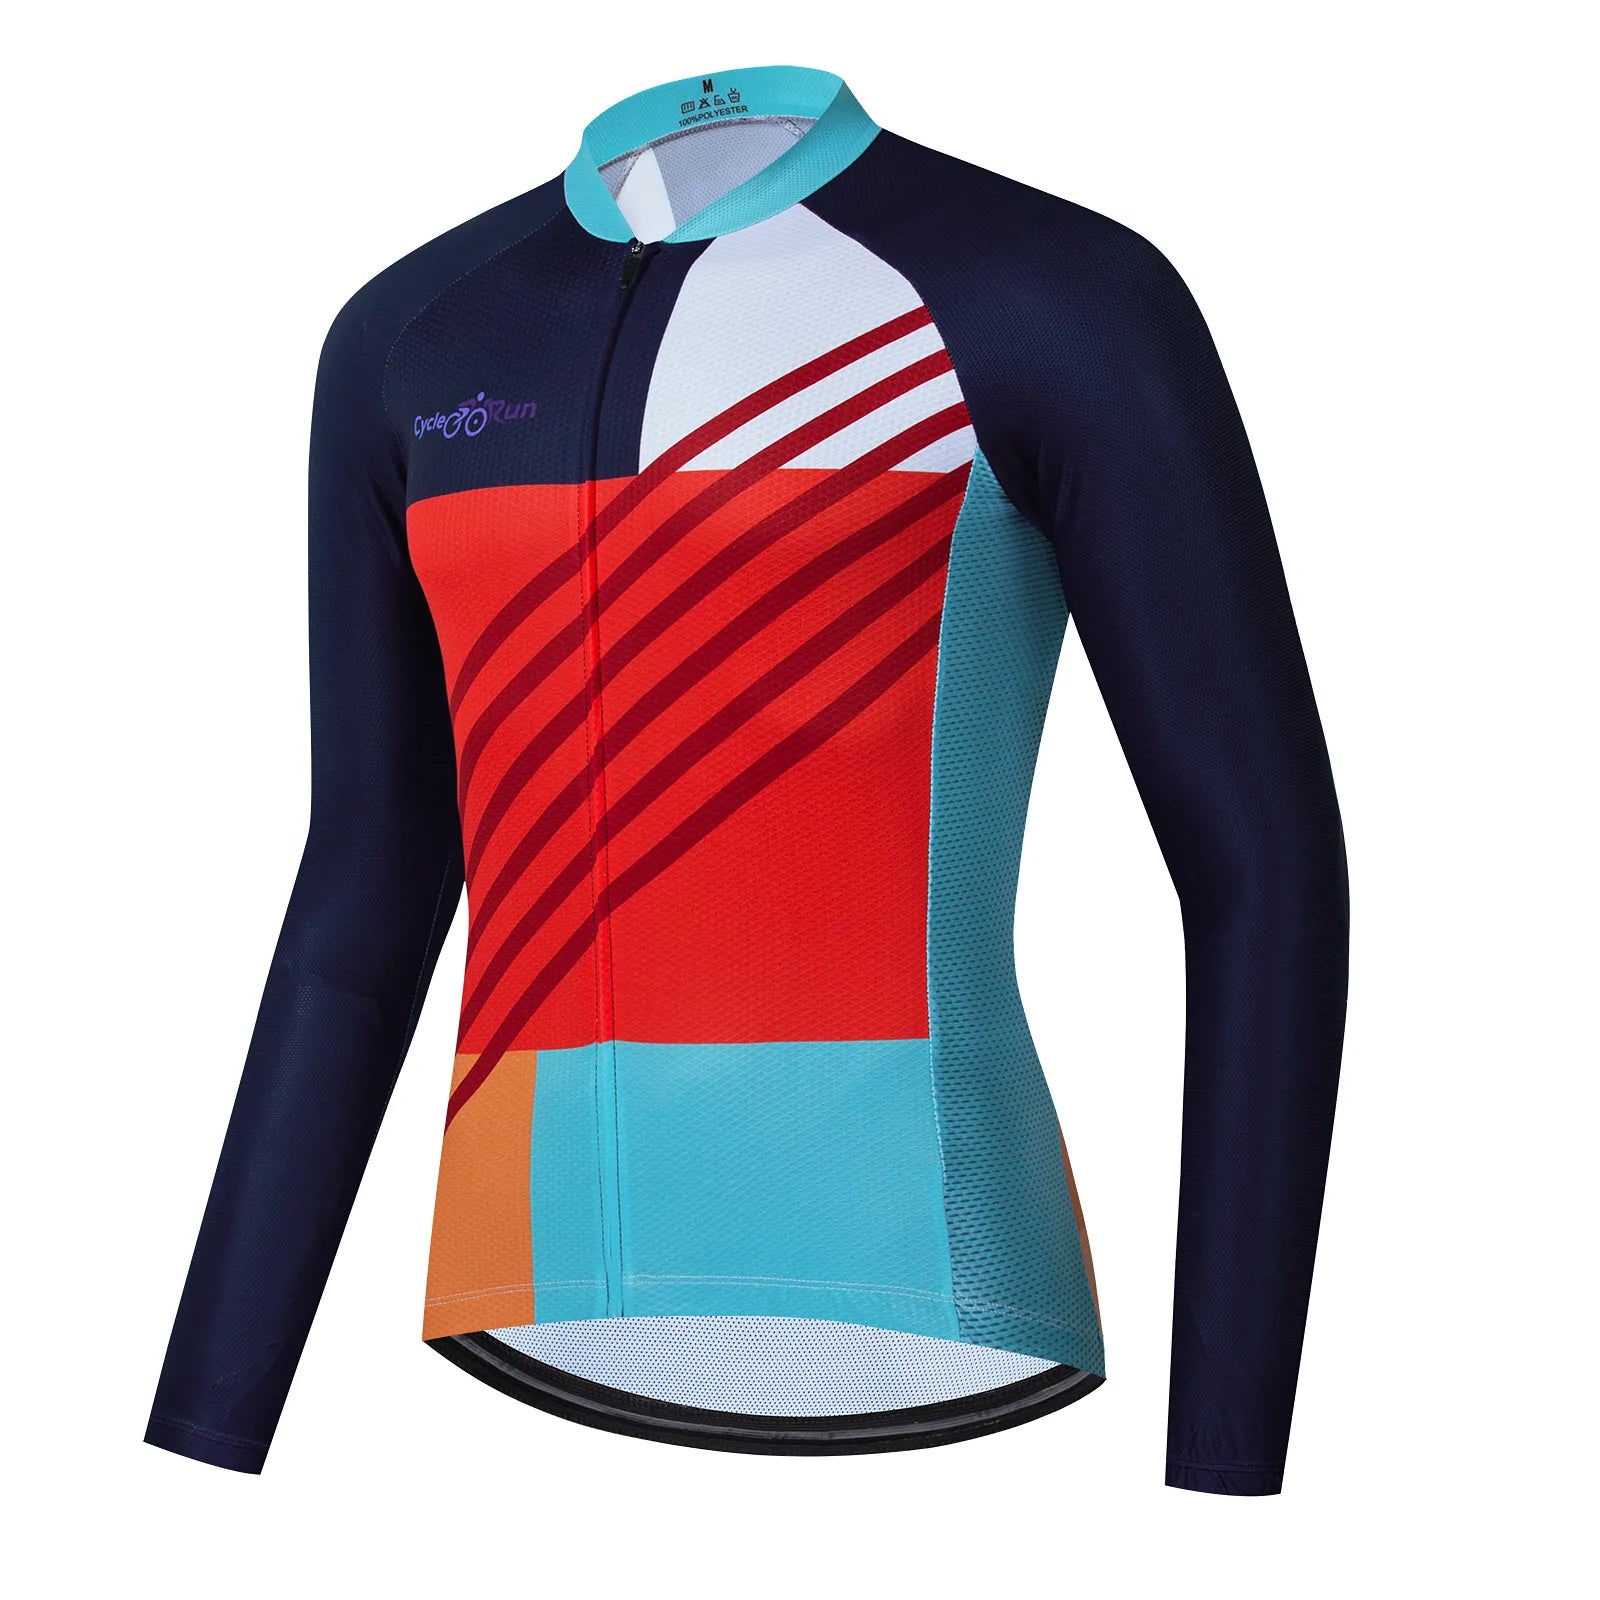 Solvi Long Sleeve cycling jersey for women